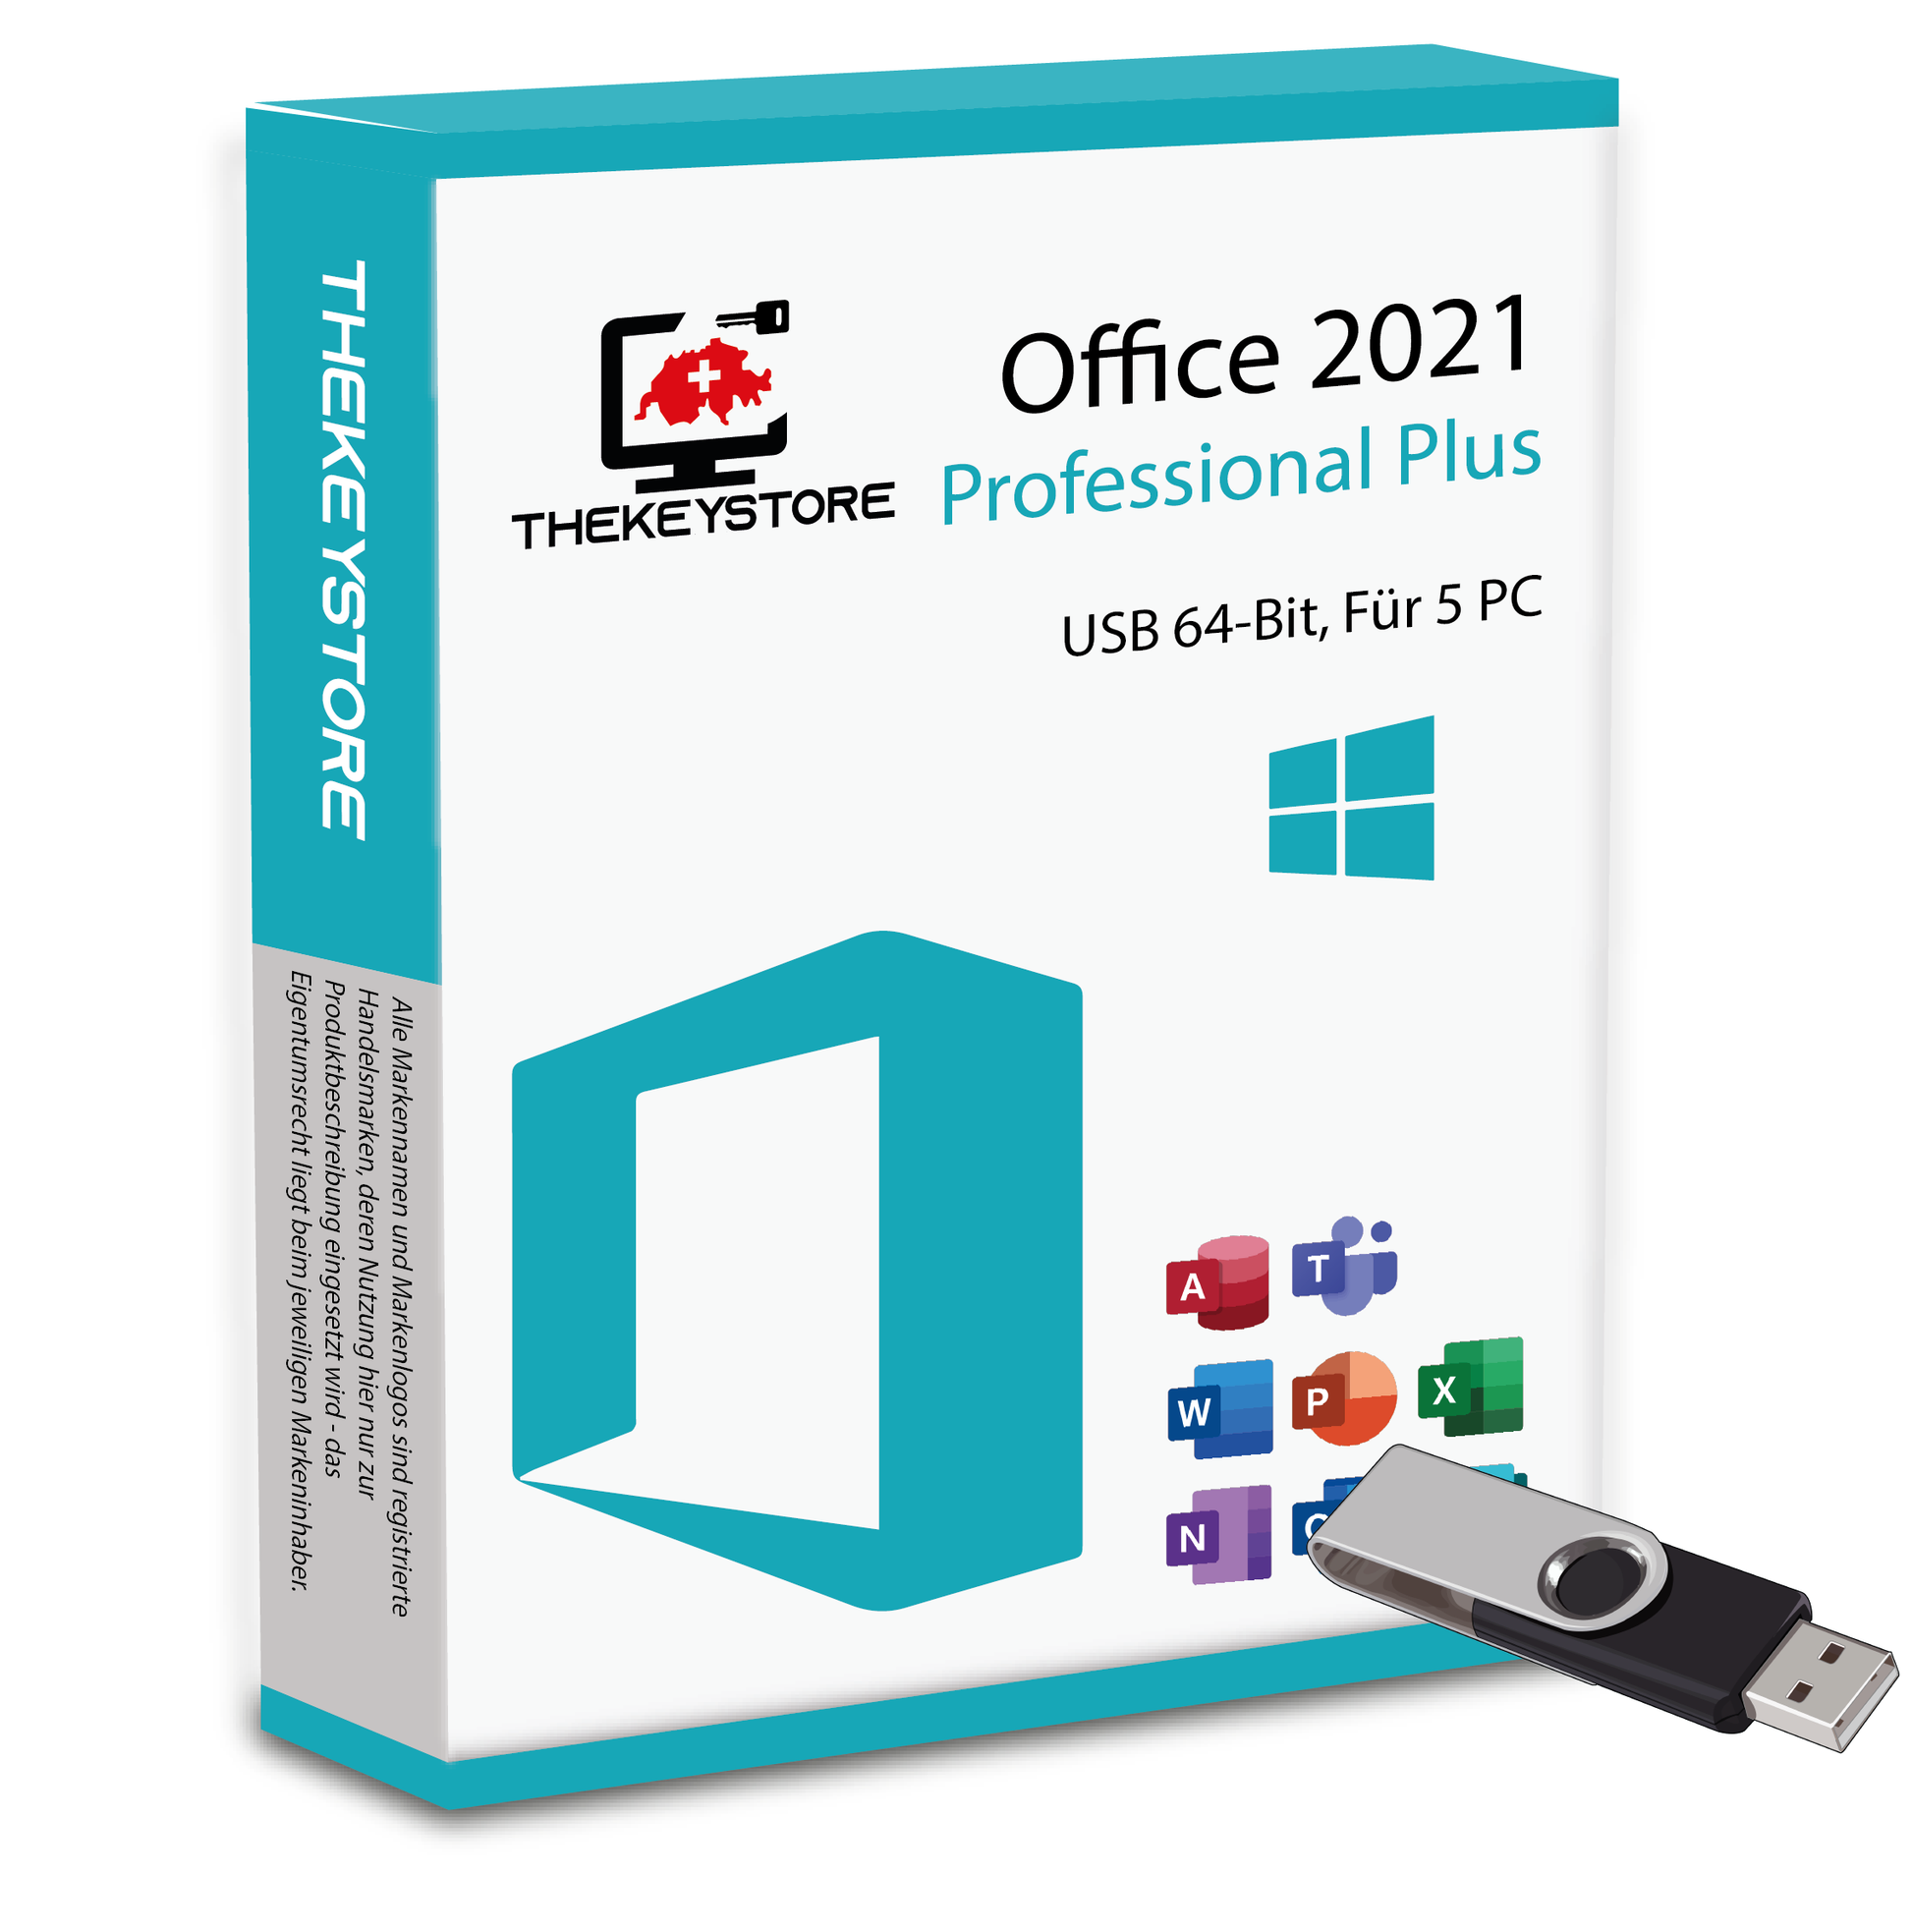 Microsoft Office 2021 Professional Plus - Für 5 PC - TheKeyStore Schweiz